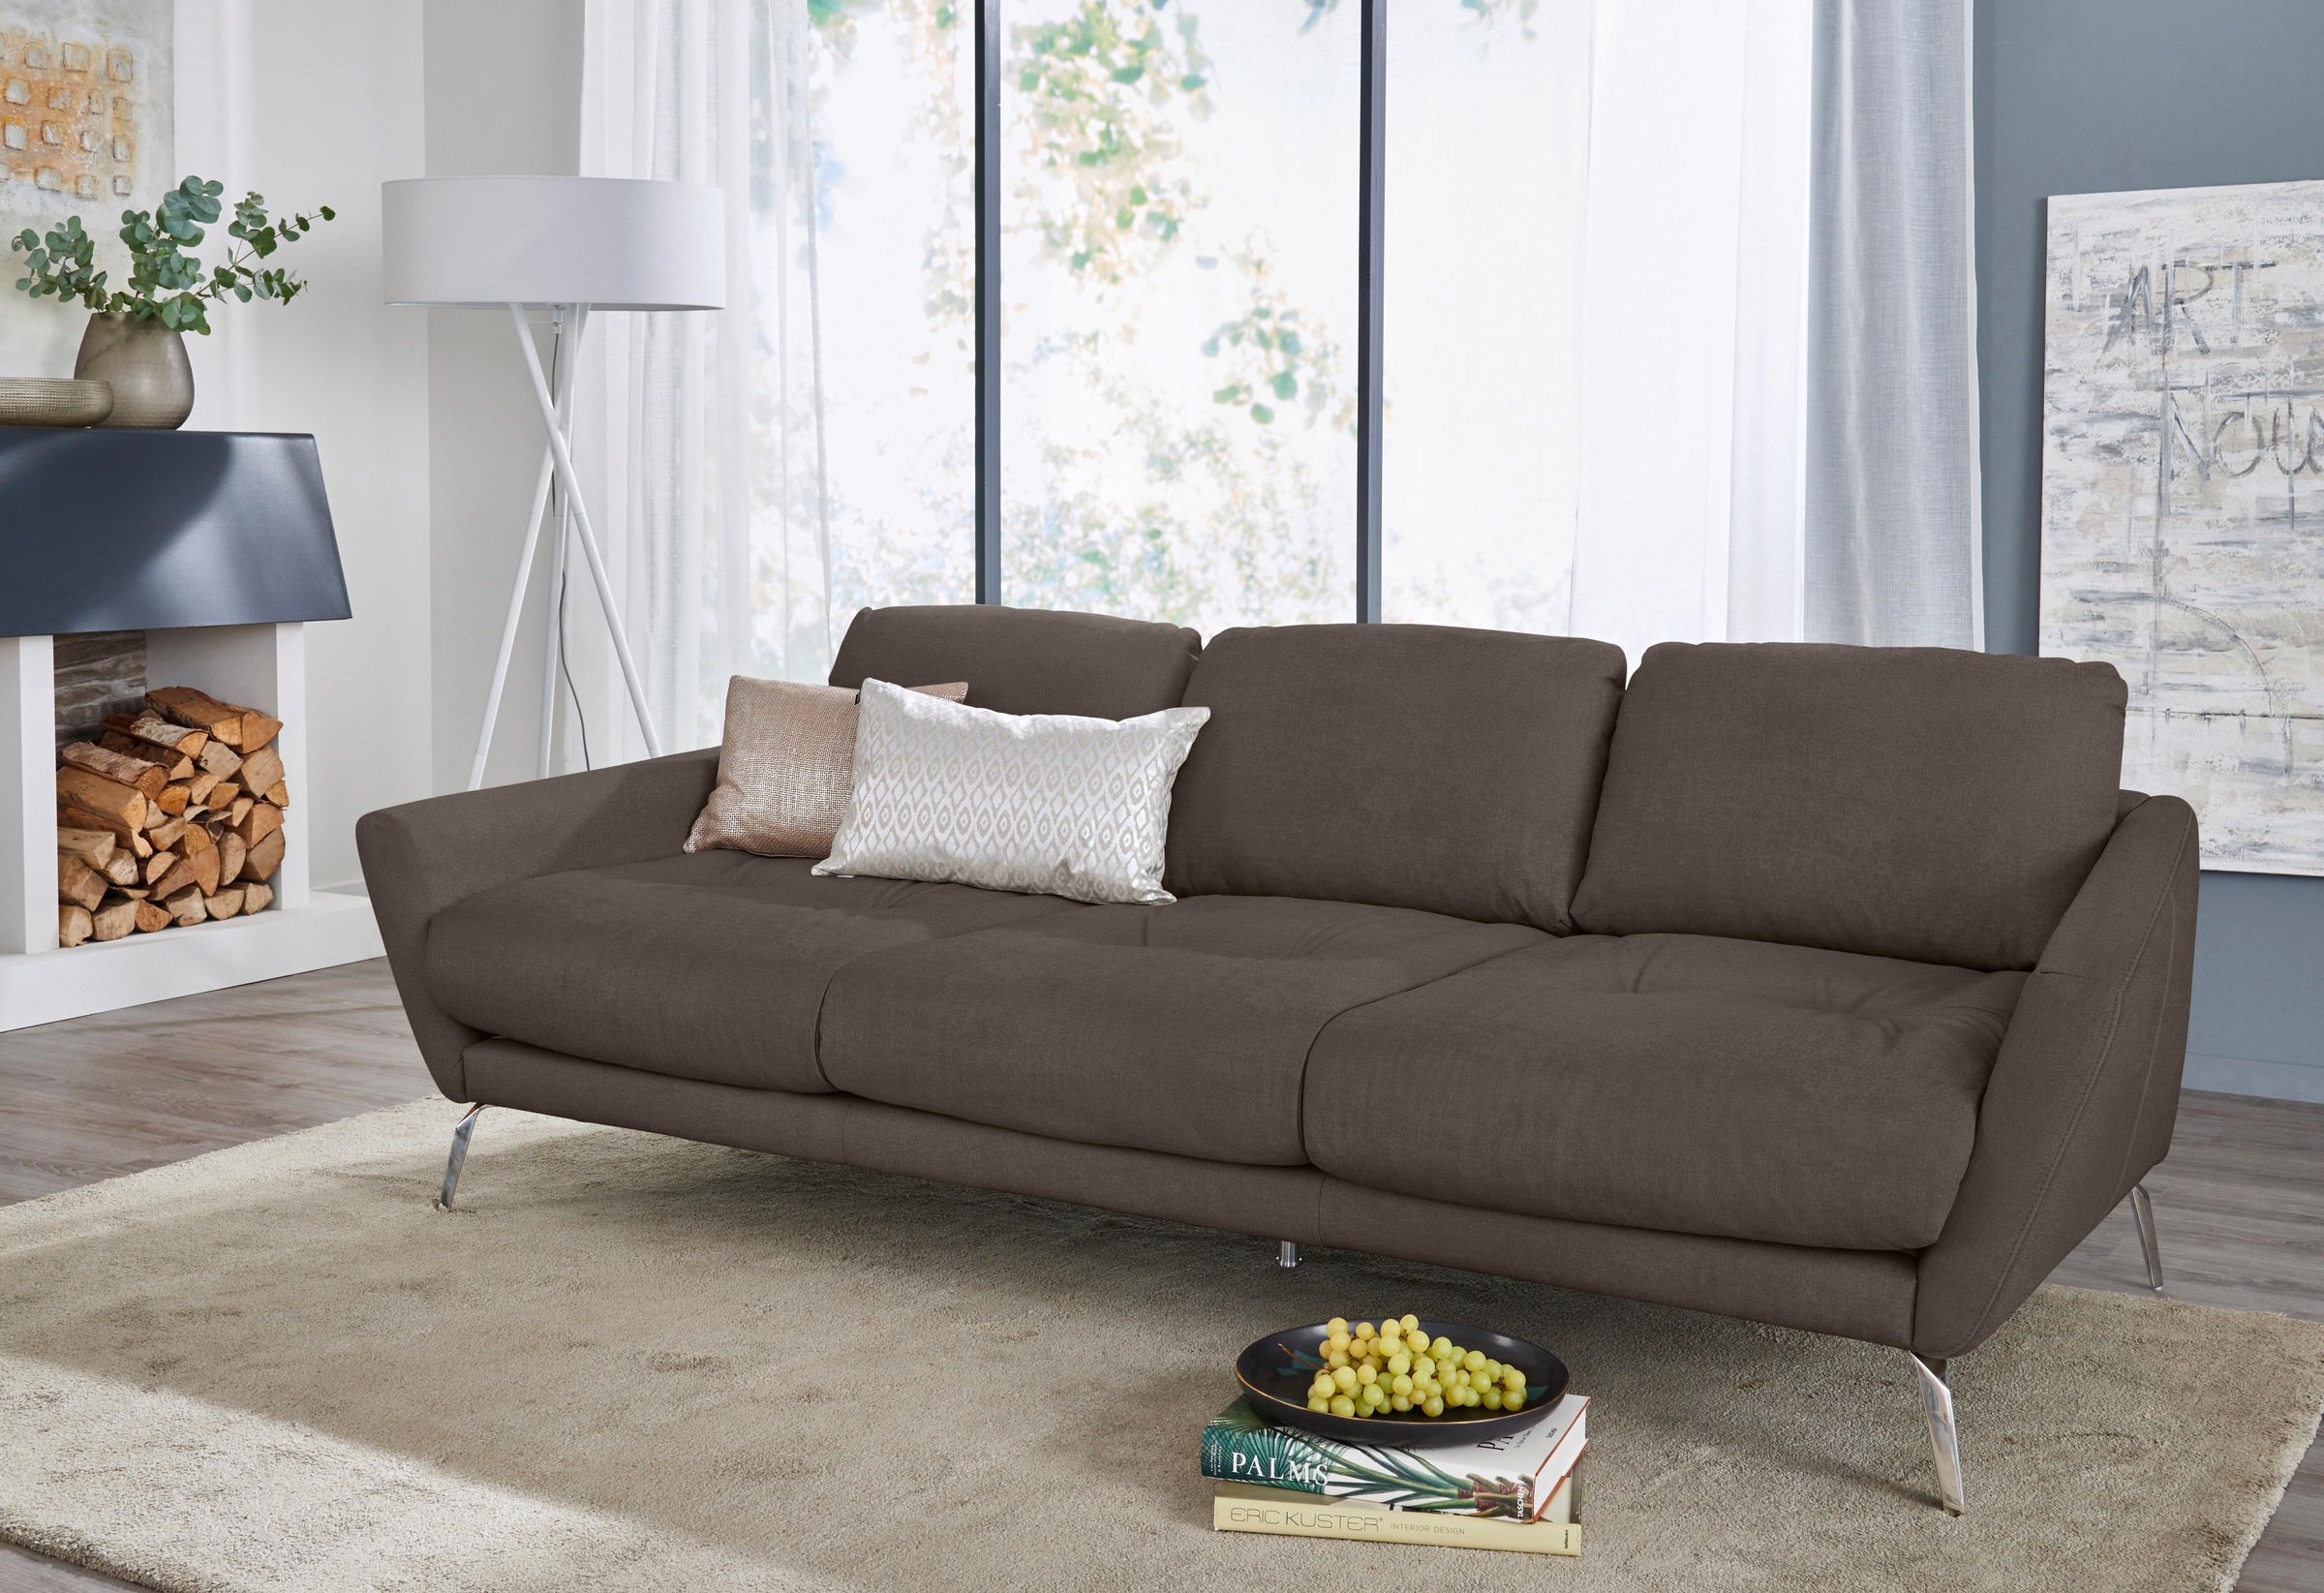 Big-Sofa »softy«, mit dekorativer Heftung im Sitz, Füße Chrom glänzend